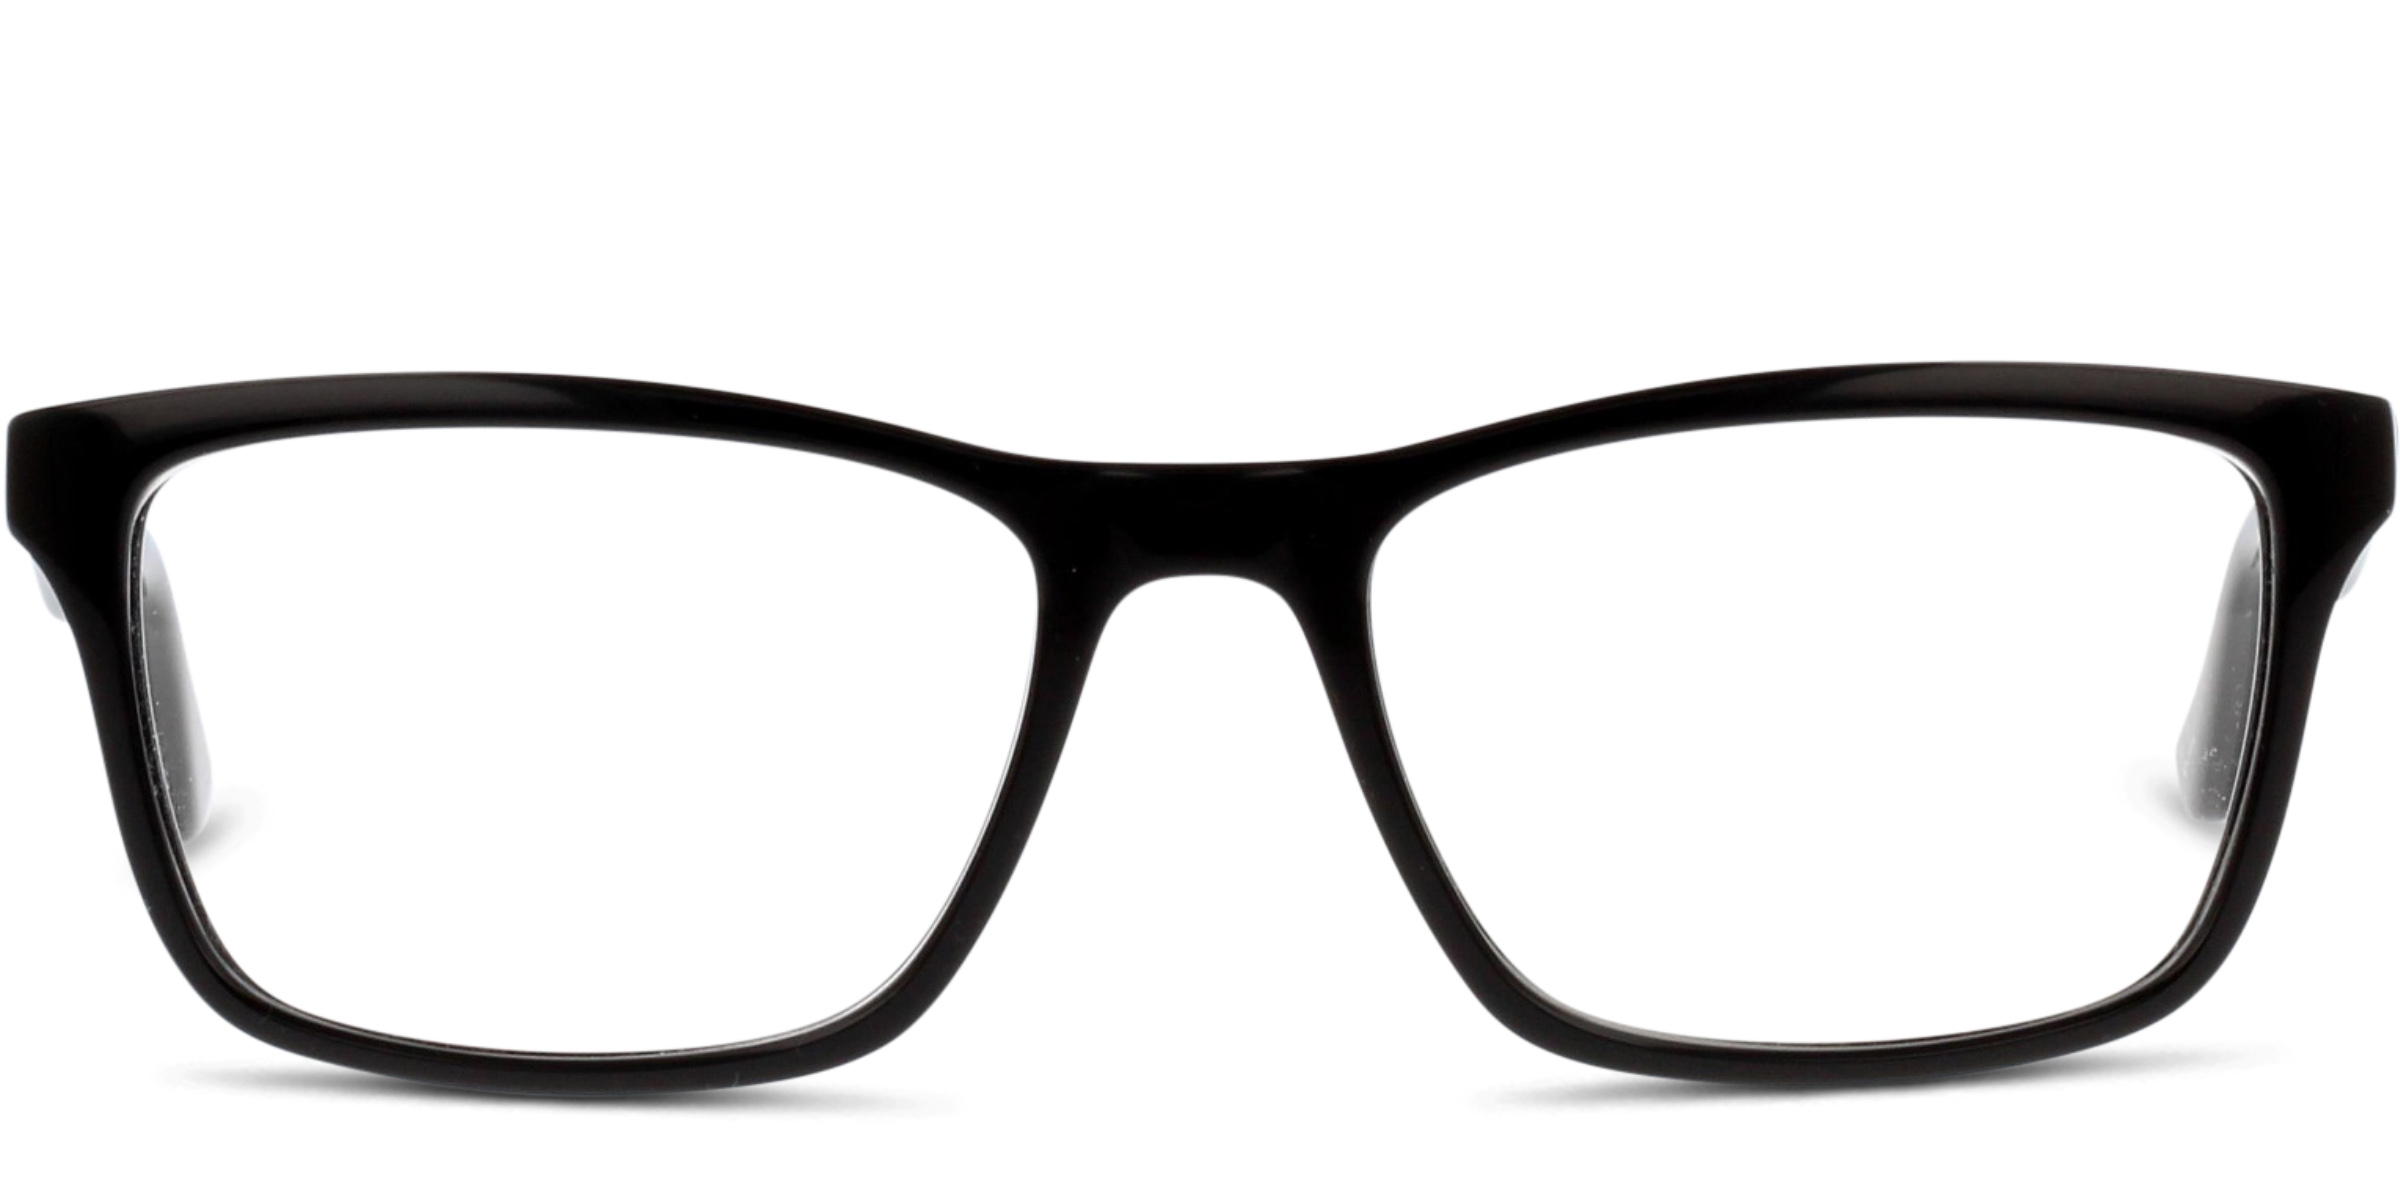 Ray-Ban RX5279 eyeglasses for men in Shiny Black